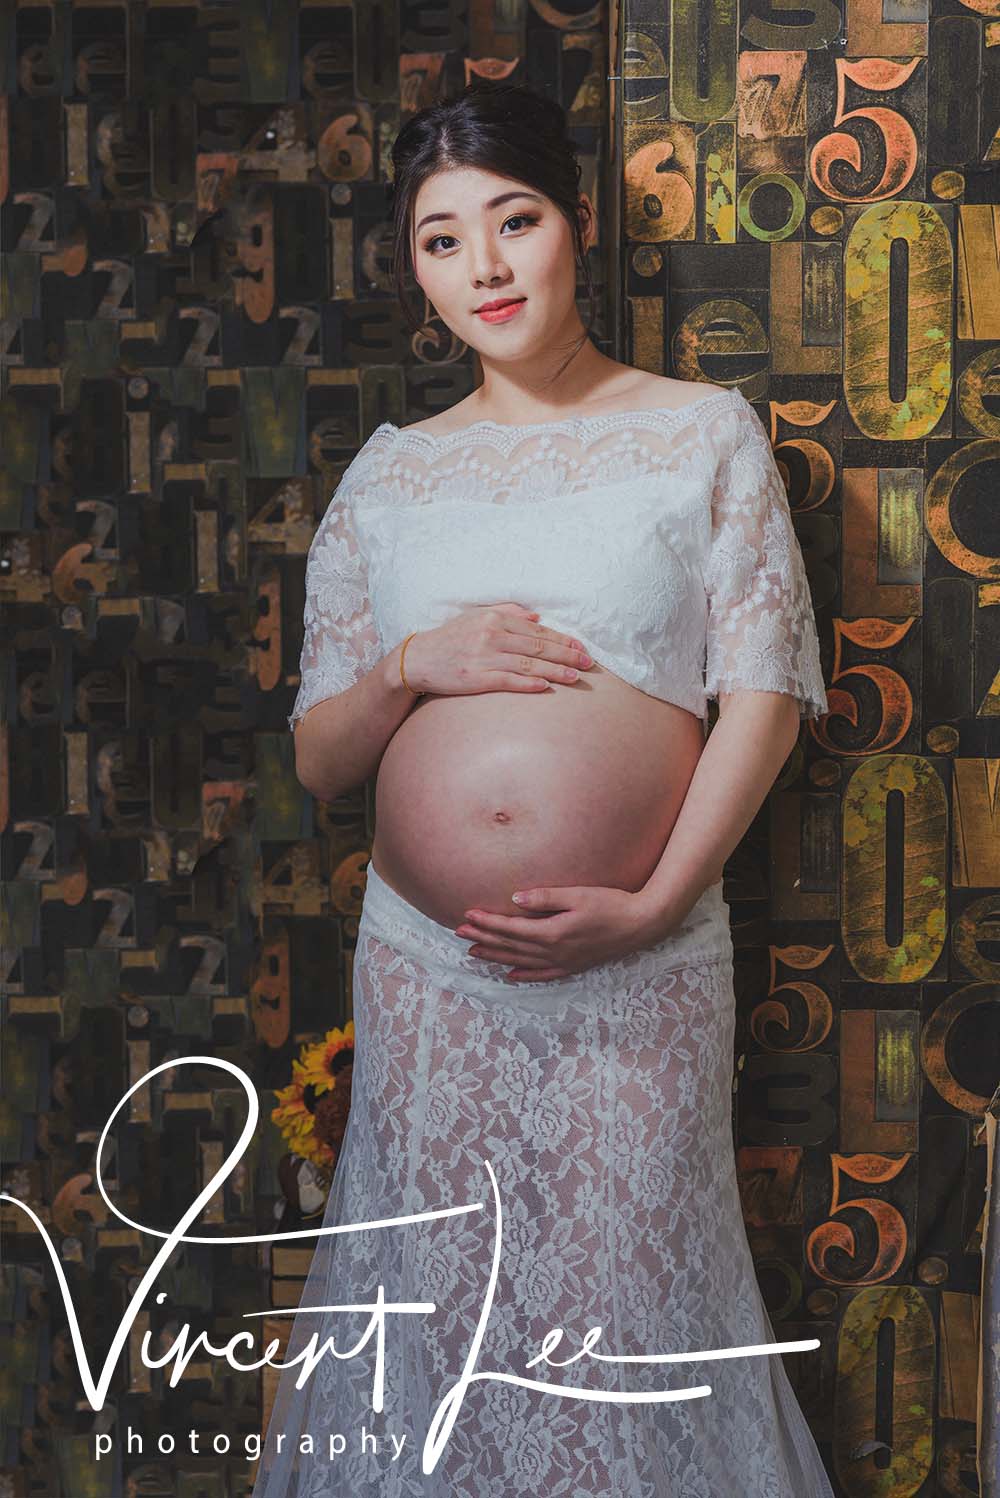 #Maternity #makeupservices #malaysia #studio #photography #awardwinningphotographer #internationalacclaimed #creative #unique #pregnant #beauty #Nikon #Elinchrom 